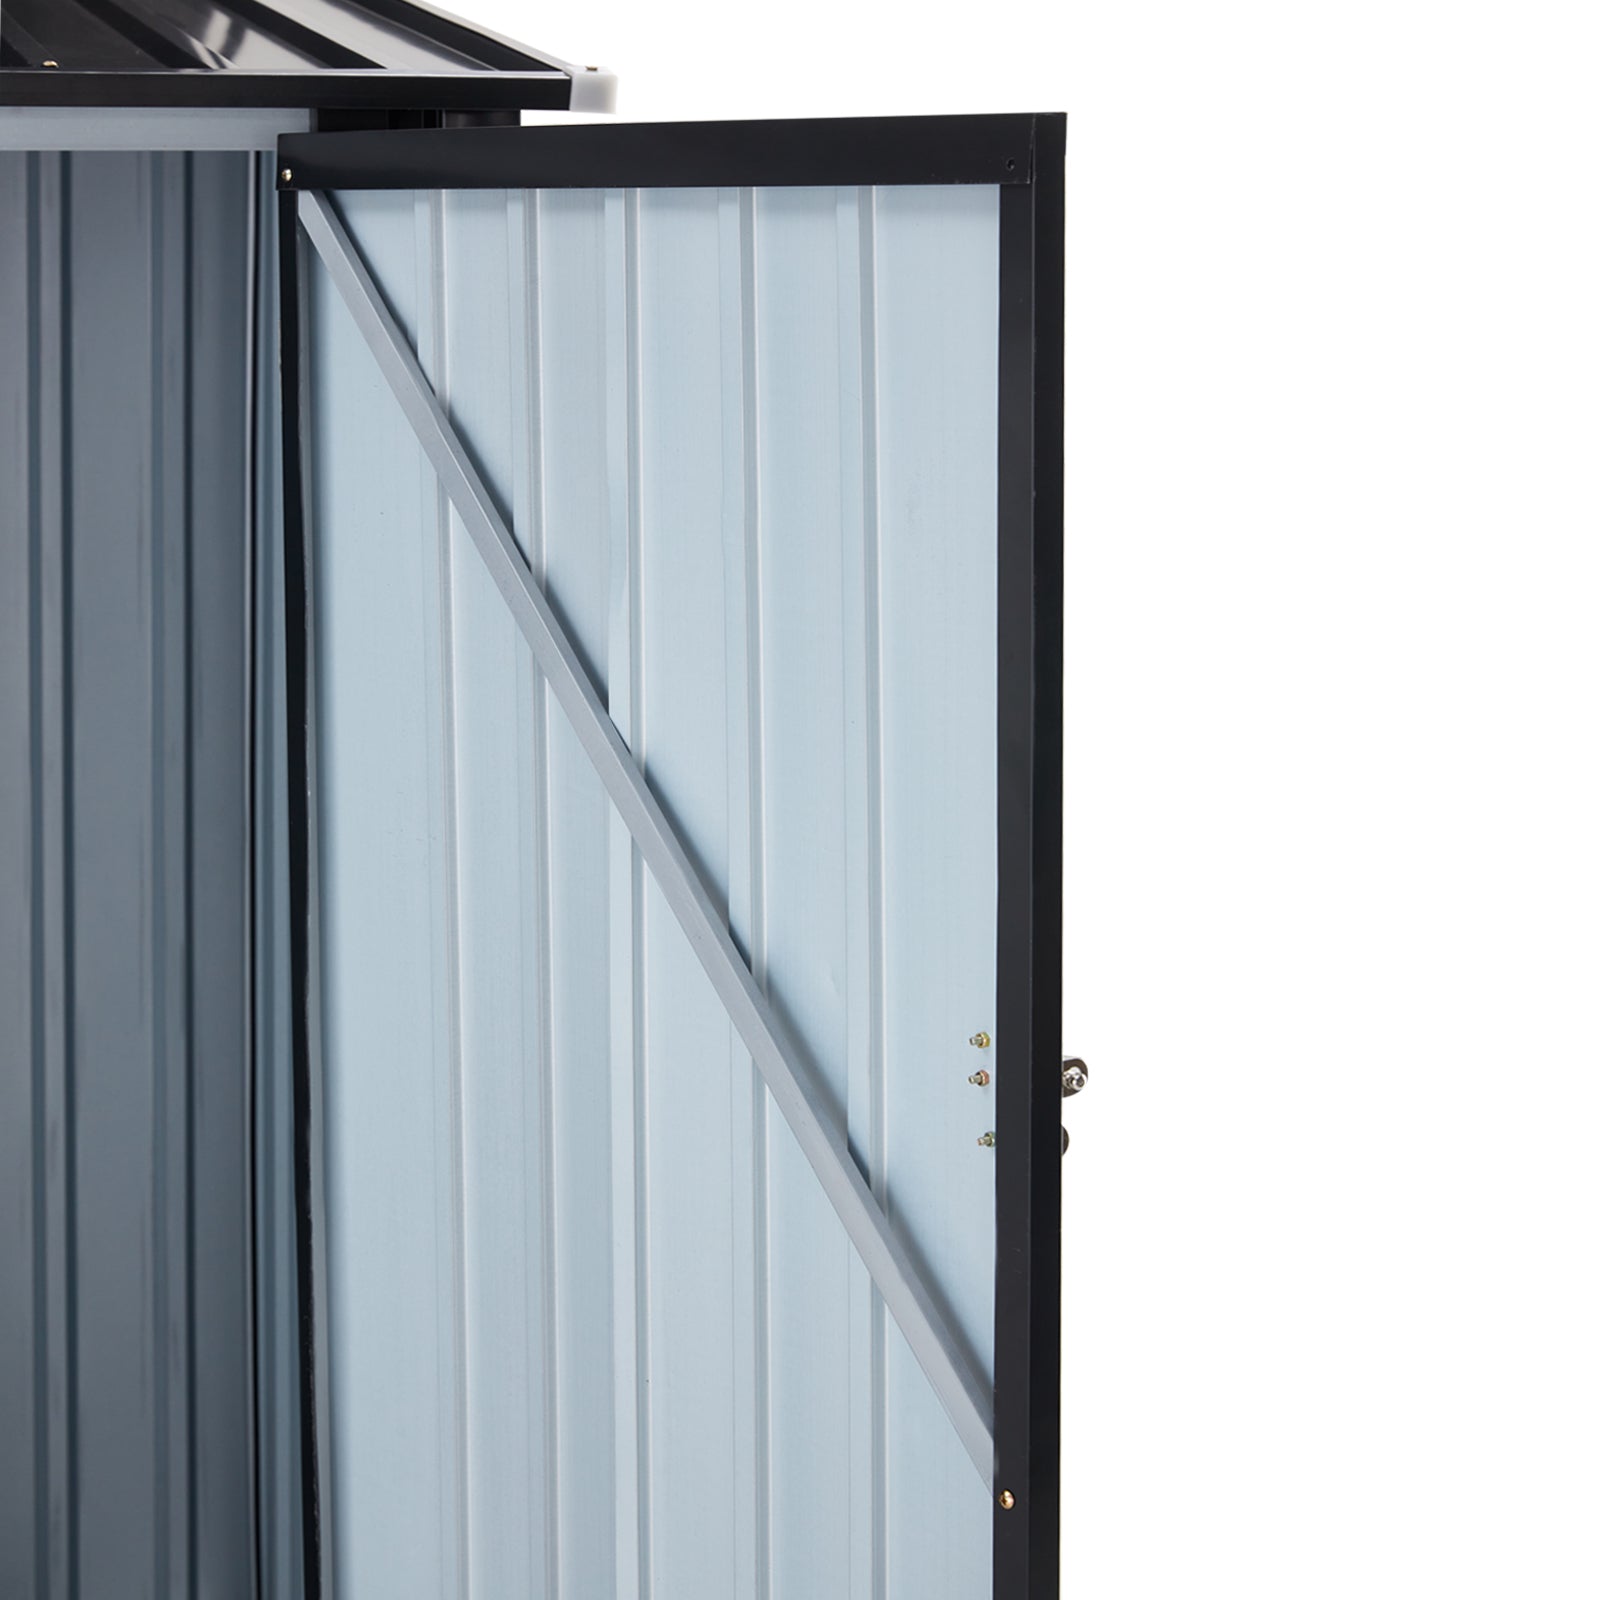 Outdoor Storage Shed, 3 x 3 FT Metal Steel Garden Shed dark gray-steel